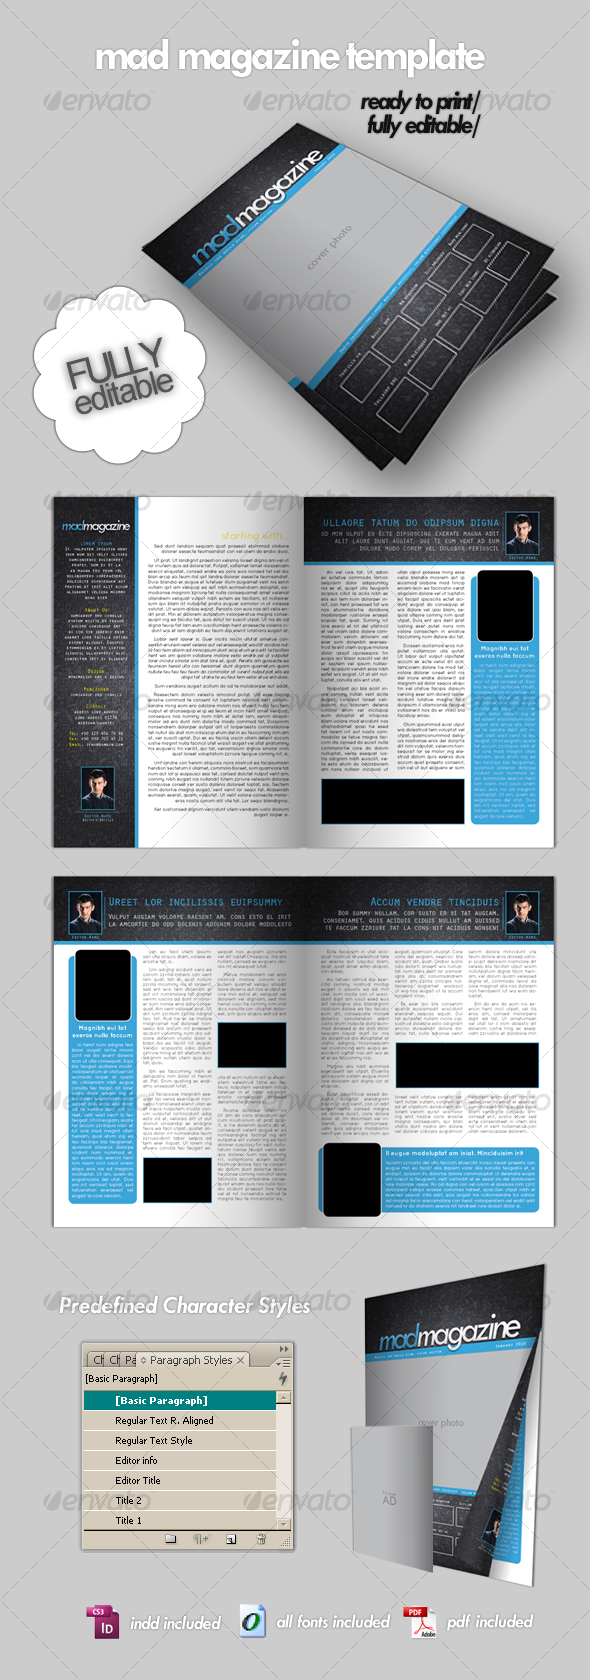 55+ Best Magazine Templates – Photoshop Psd & Indesign Regarding Blank Magazine Template Psd